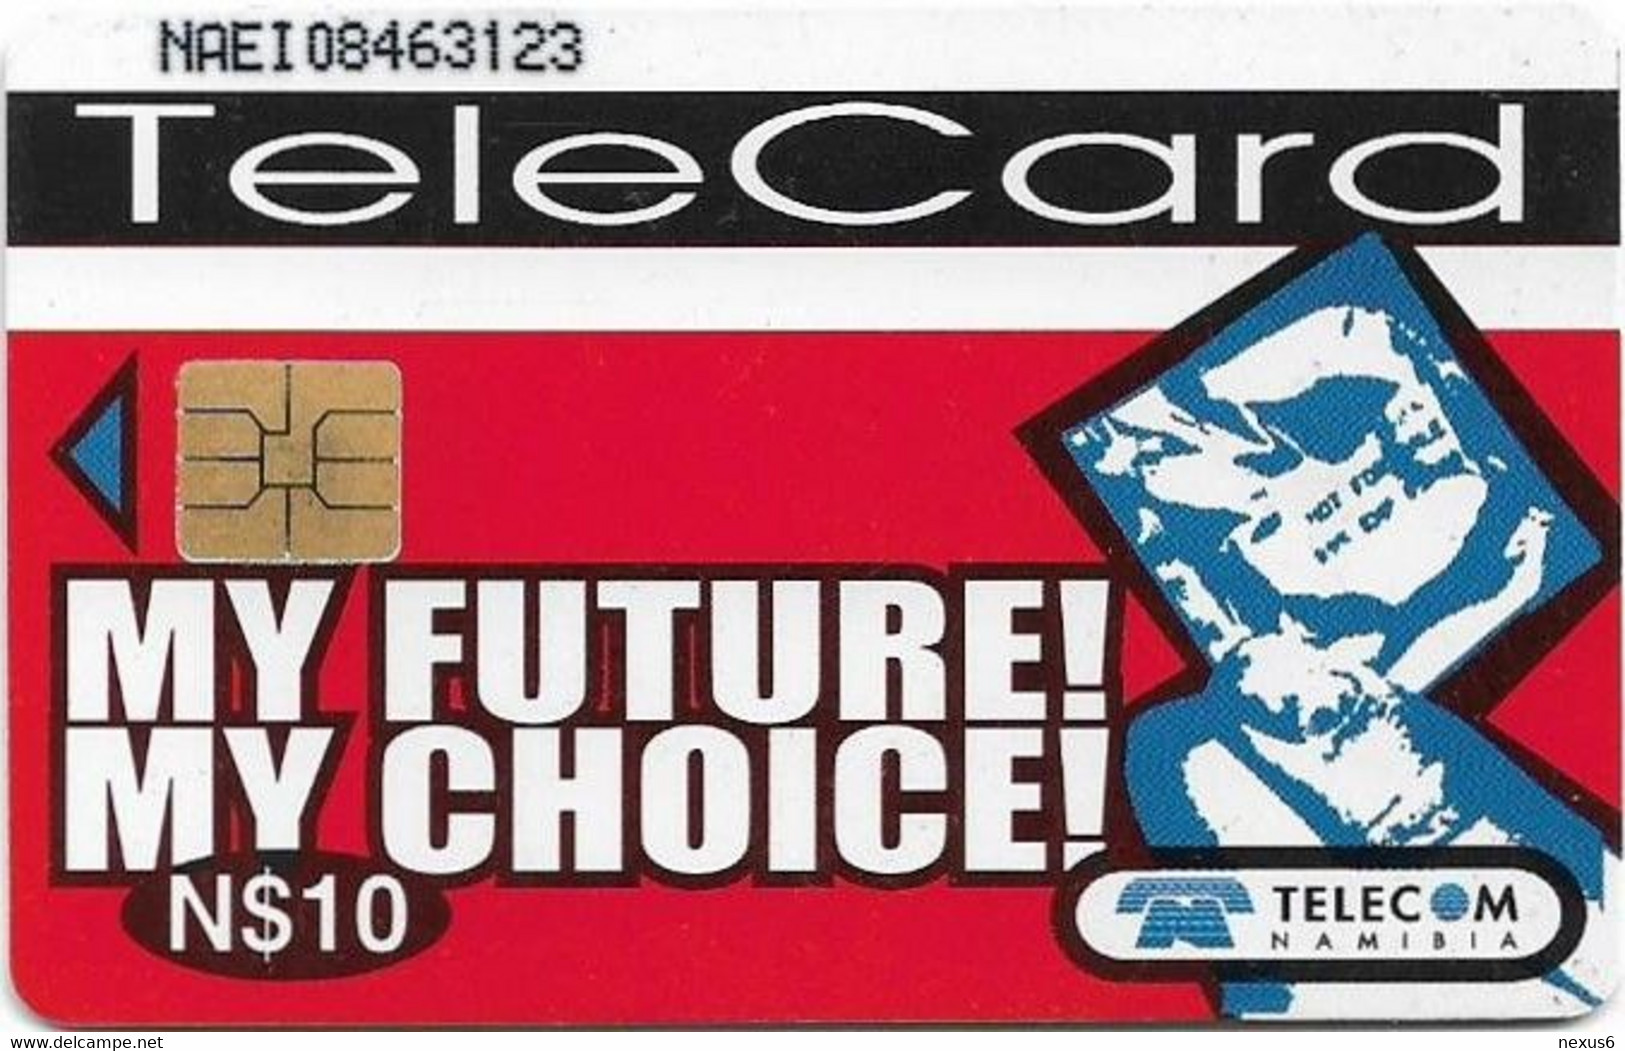 Namibia - Telecom Namibia - Aids, My Future My Choice - Wear A Condom #2, 2000, 10$, Used - Namibie